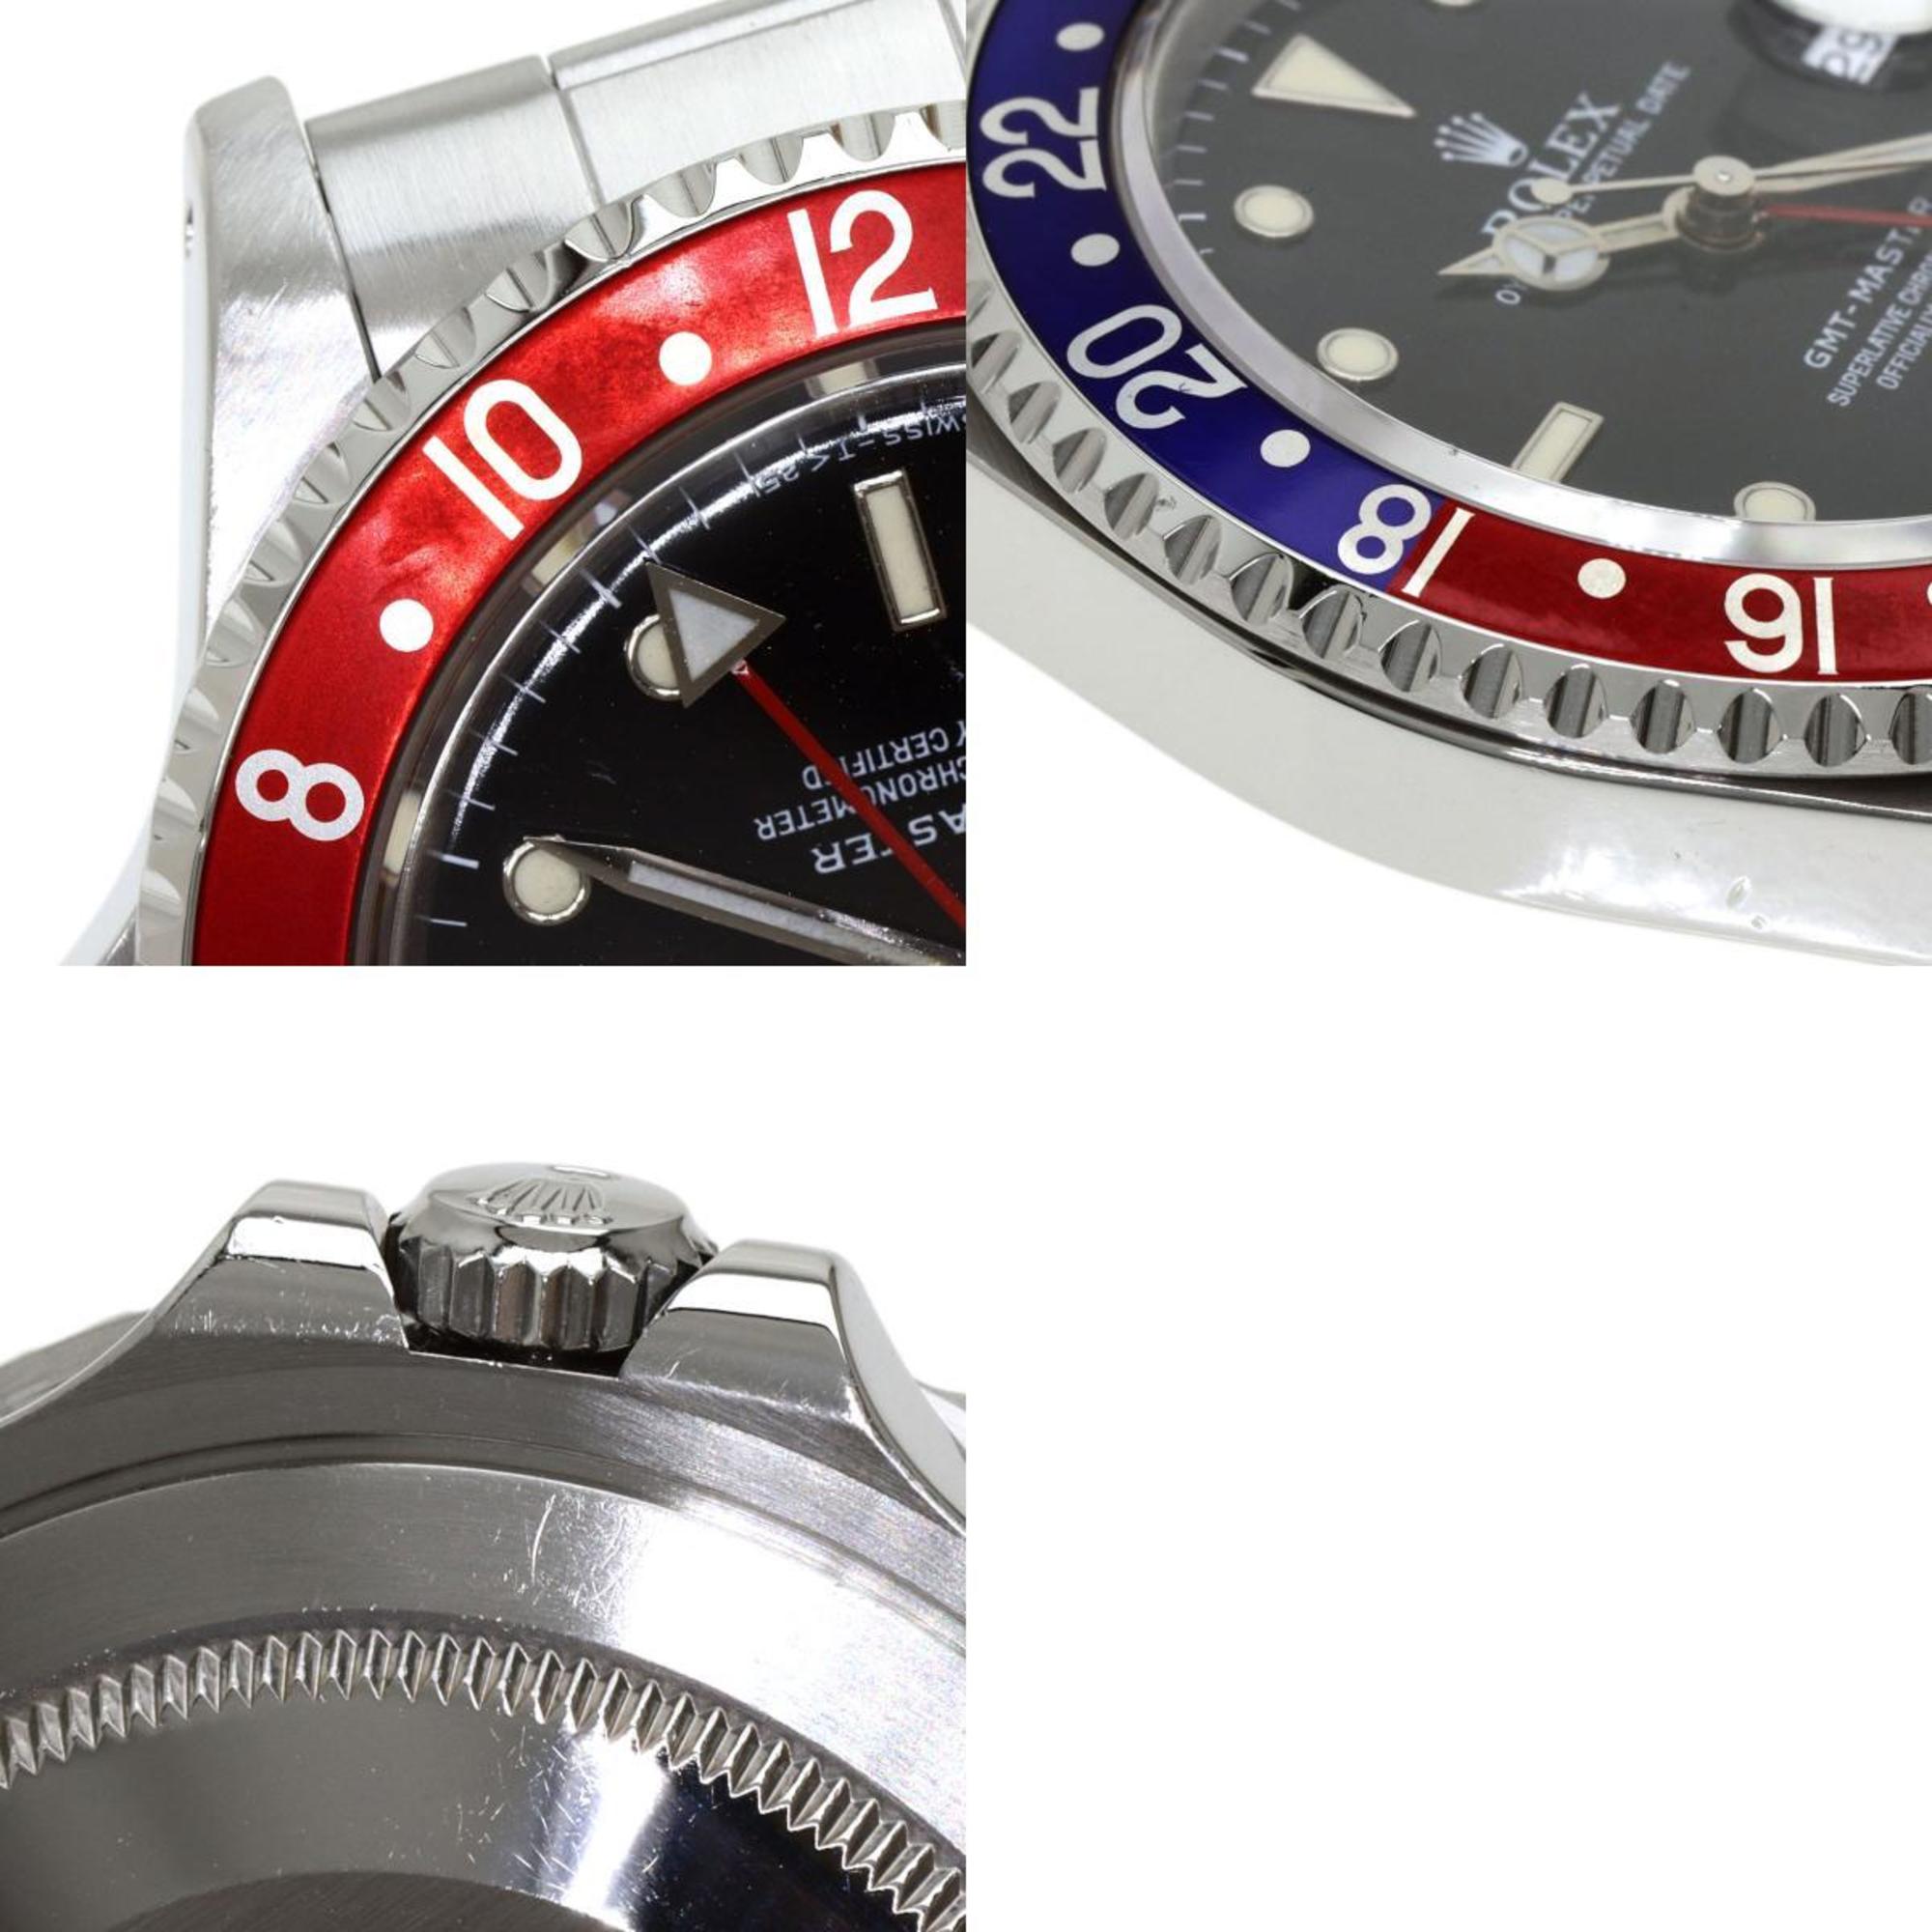 Rolex 16700 GMT Master Blue Red Bezel All Tritium Watch Stainless Steel/SS Men's